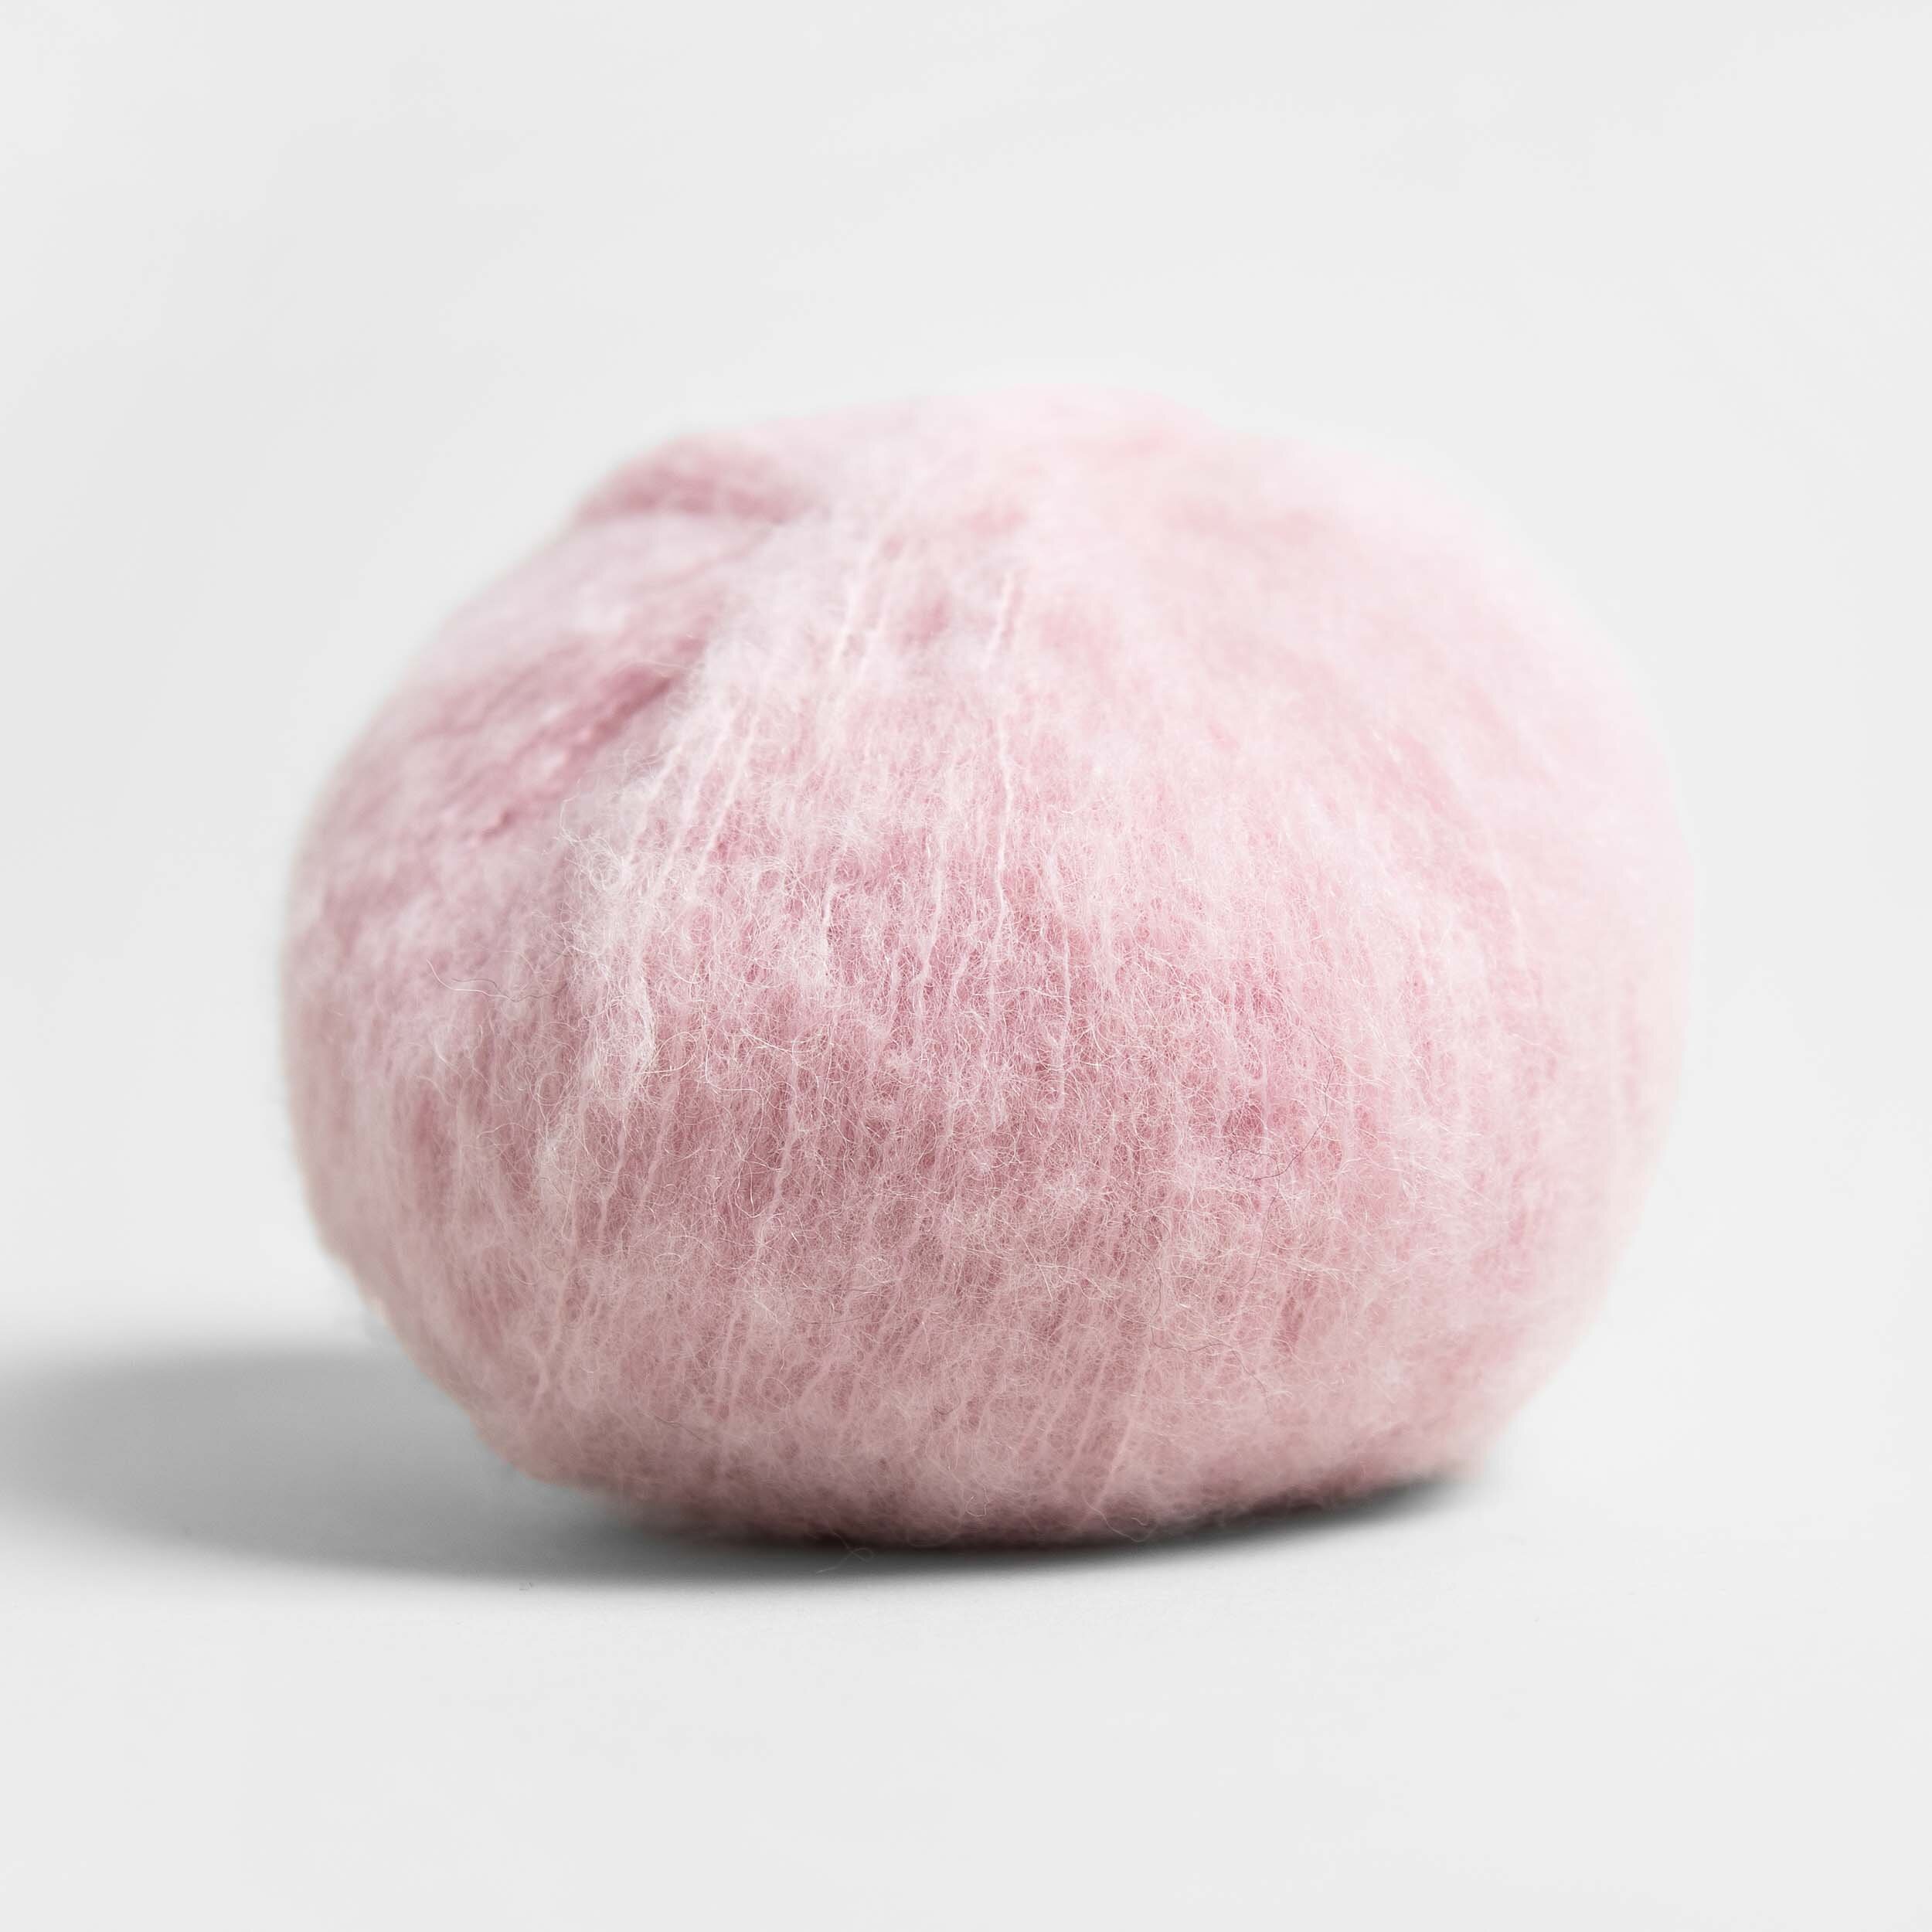 ball of pink yarn